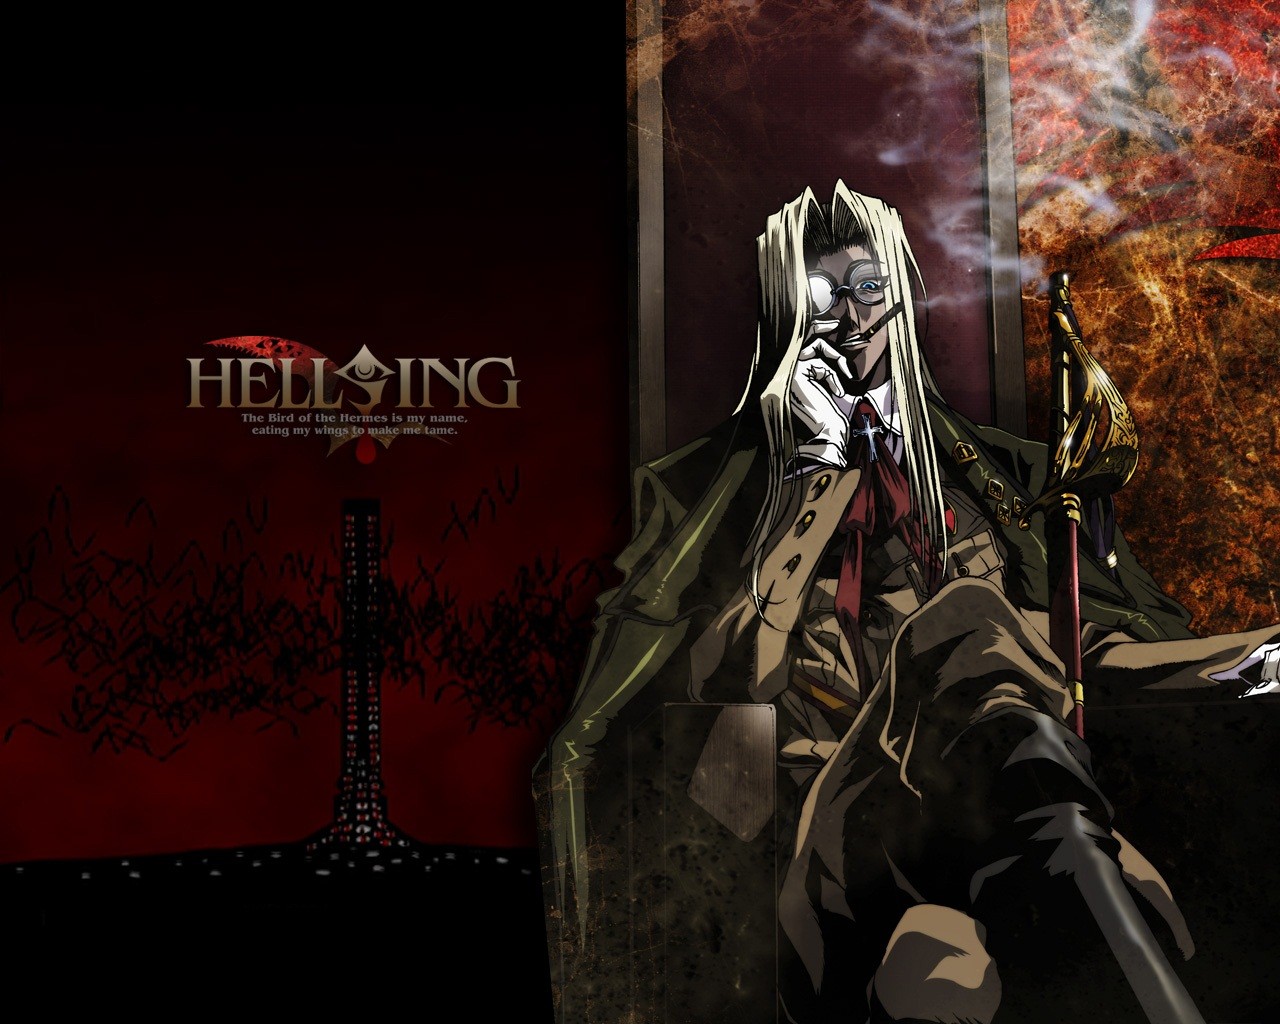 Anime 1280x1024 Hellsing sword Sir Integra Fairbrook Wingates Hellsing bats logo tower anime frontal view